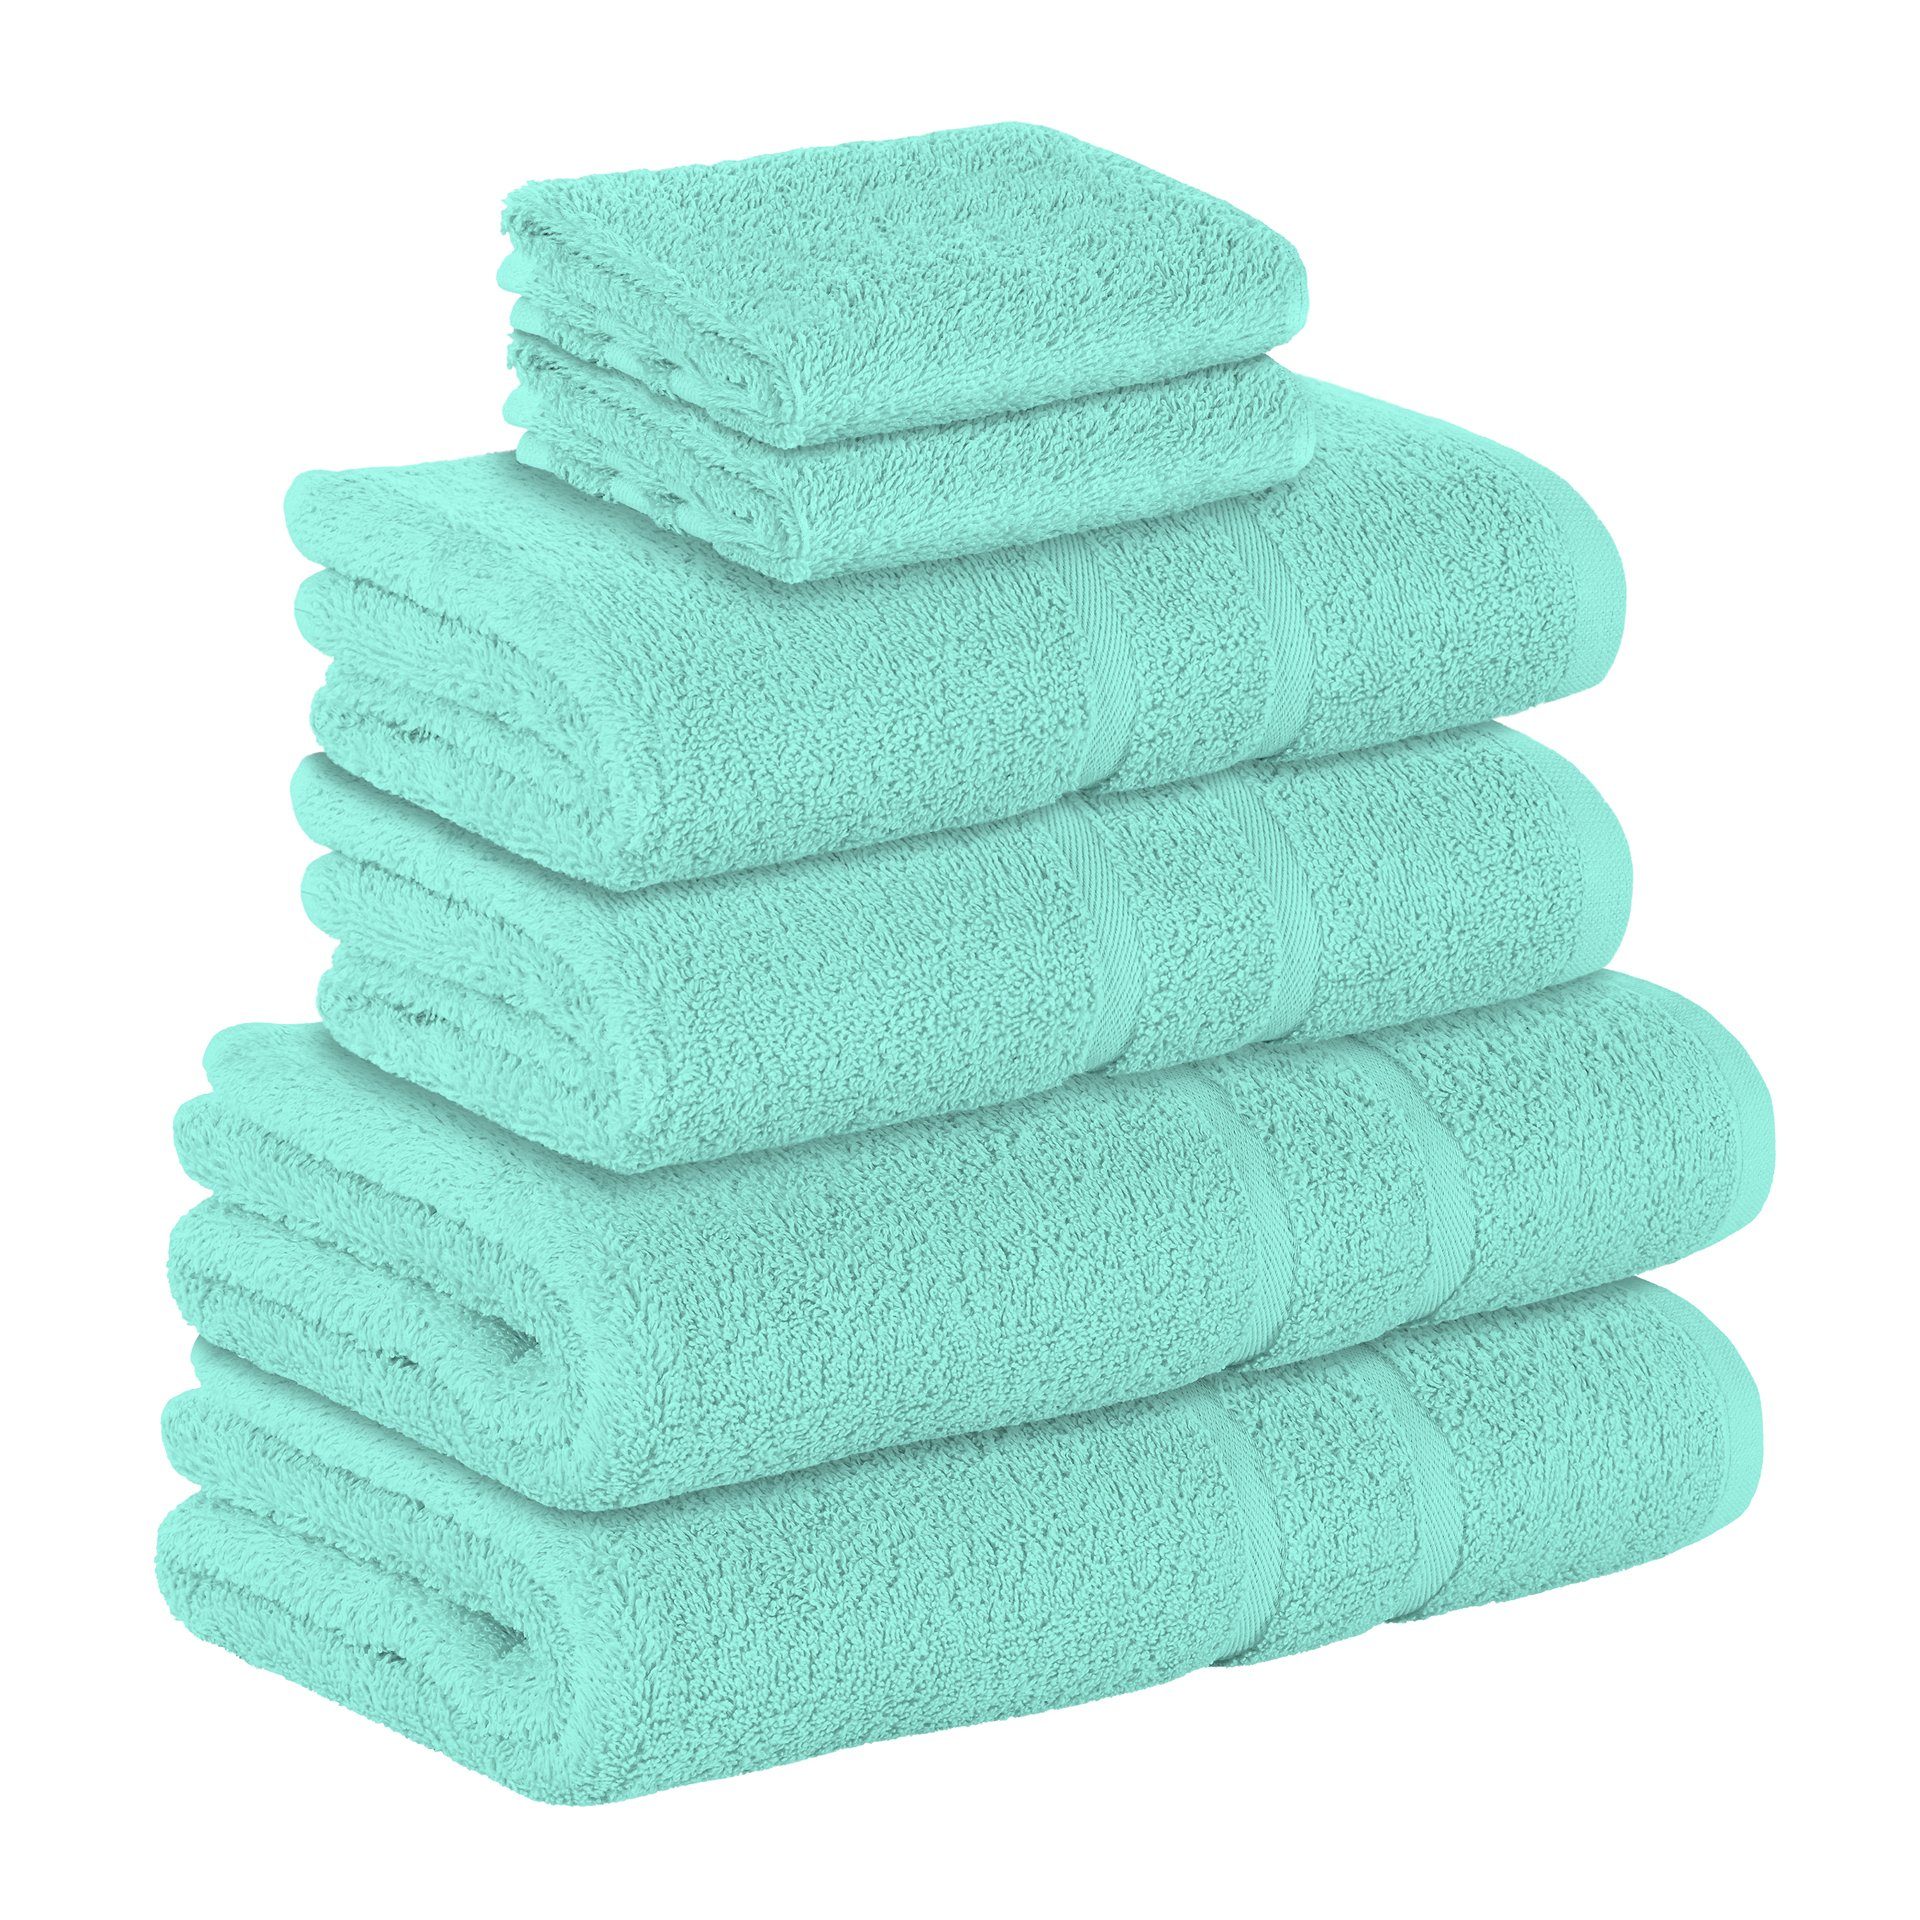 StickandShine Handtuch Set 2x Gästehandtuch 2x Handtücher 2x Duschtücher als SET in verschiedenen Farben (6 Teilig) 100% Baumwolle 500 GSM Frottee 6er Handtuch Pack, 100% Baumwolle 500GSM Mint